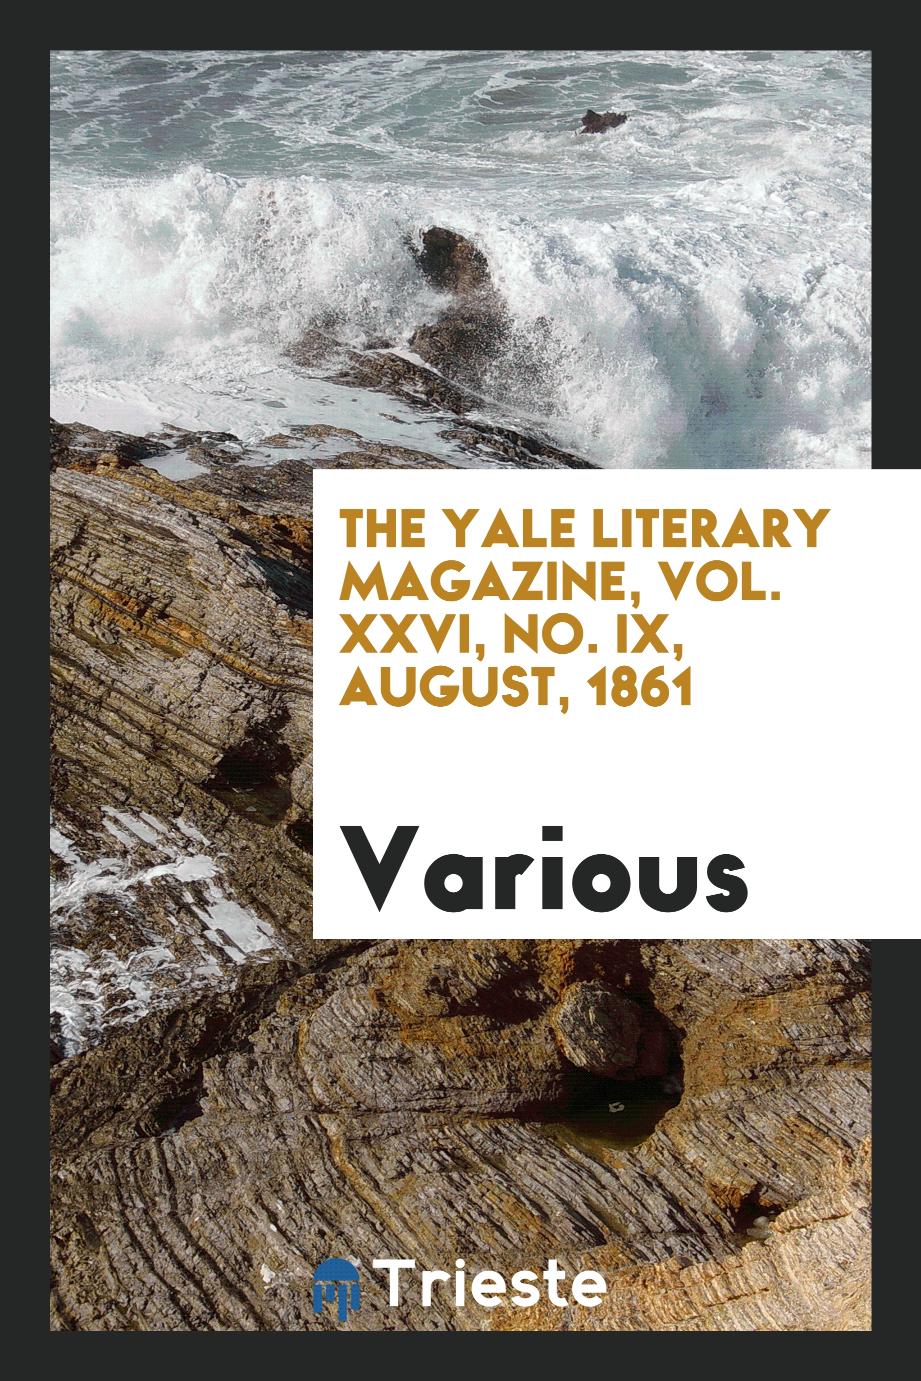 The Yale literary magazine, Vol. XXVI, No. IX, August, 1861